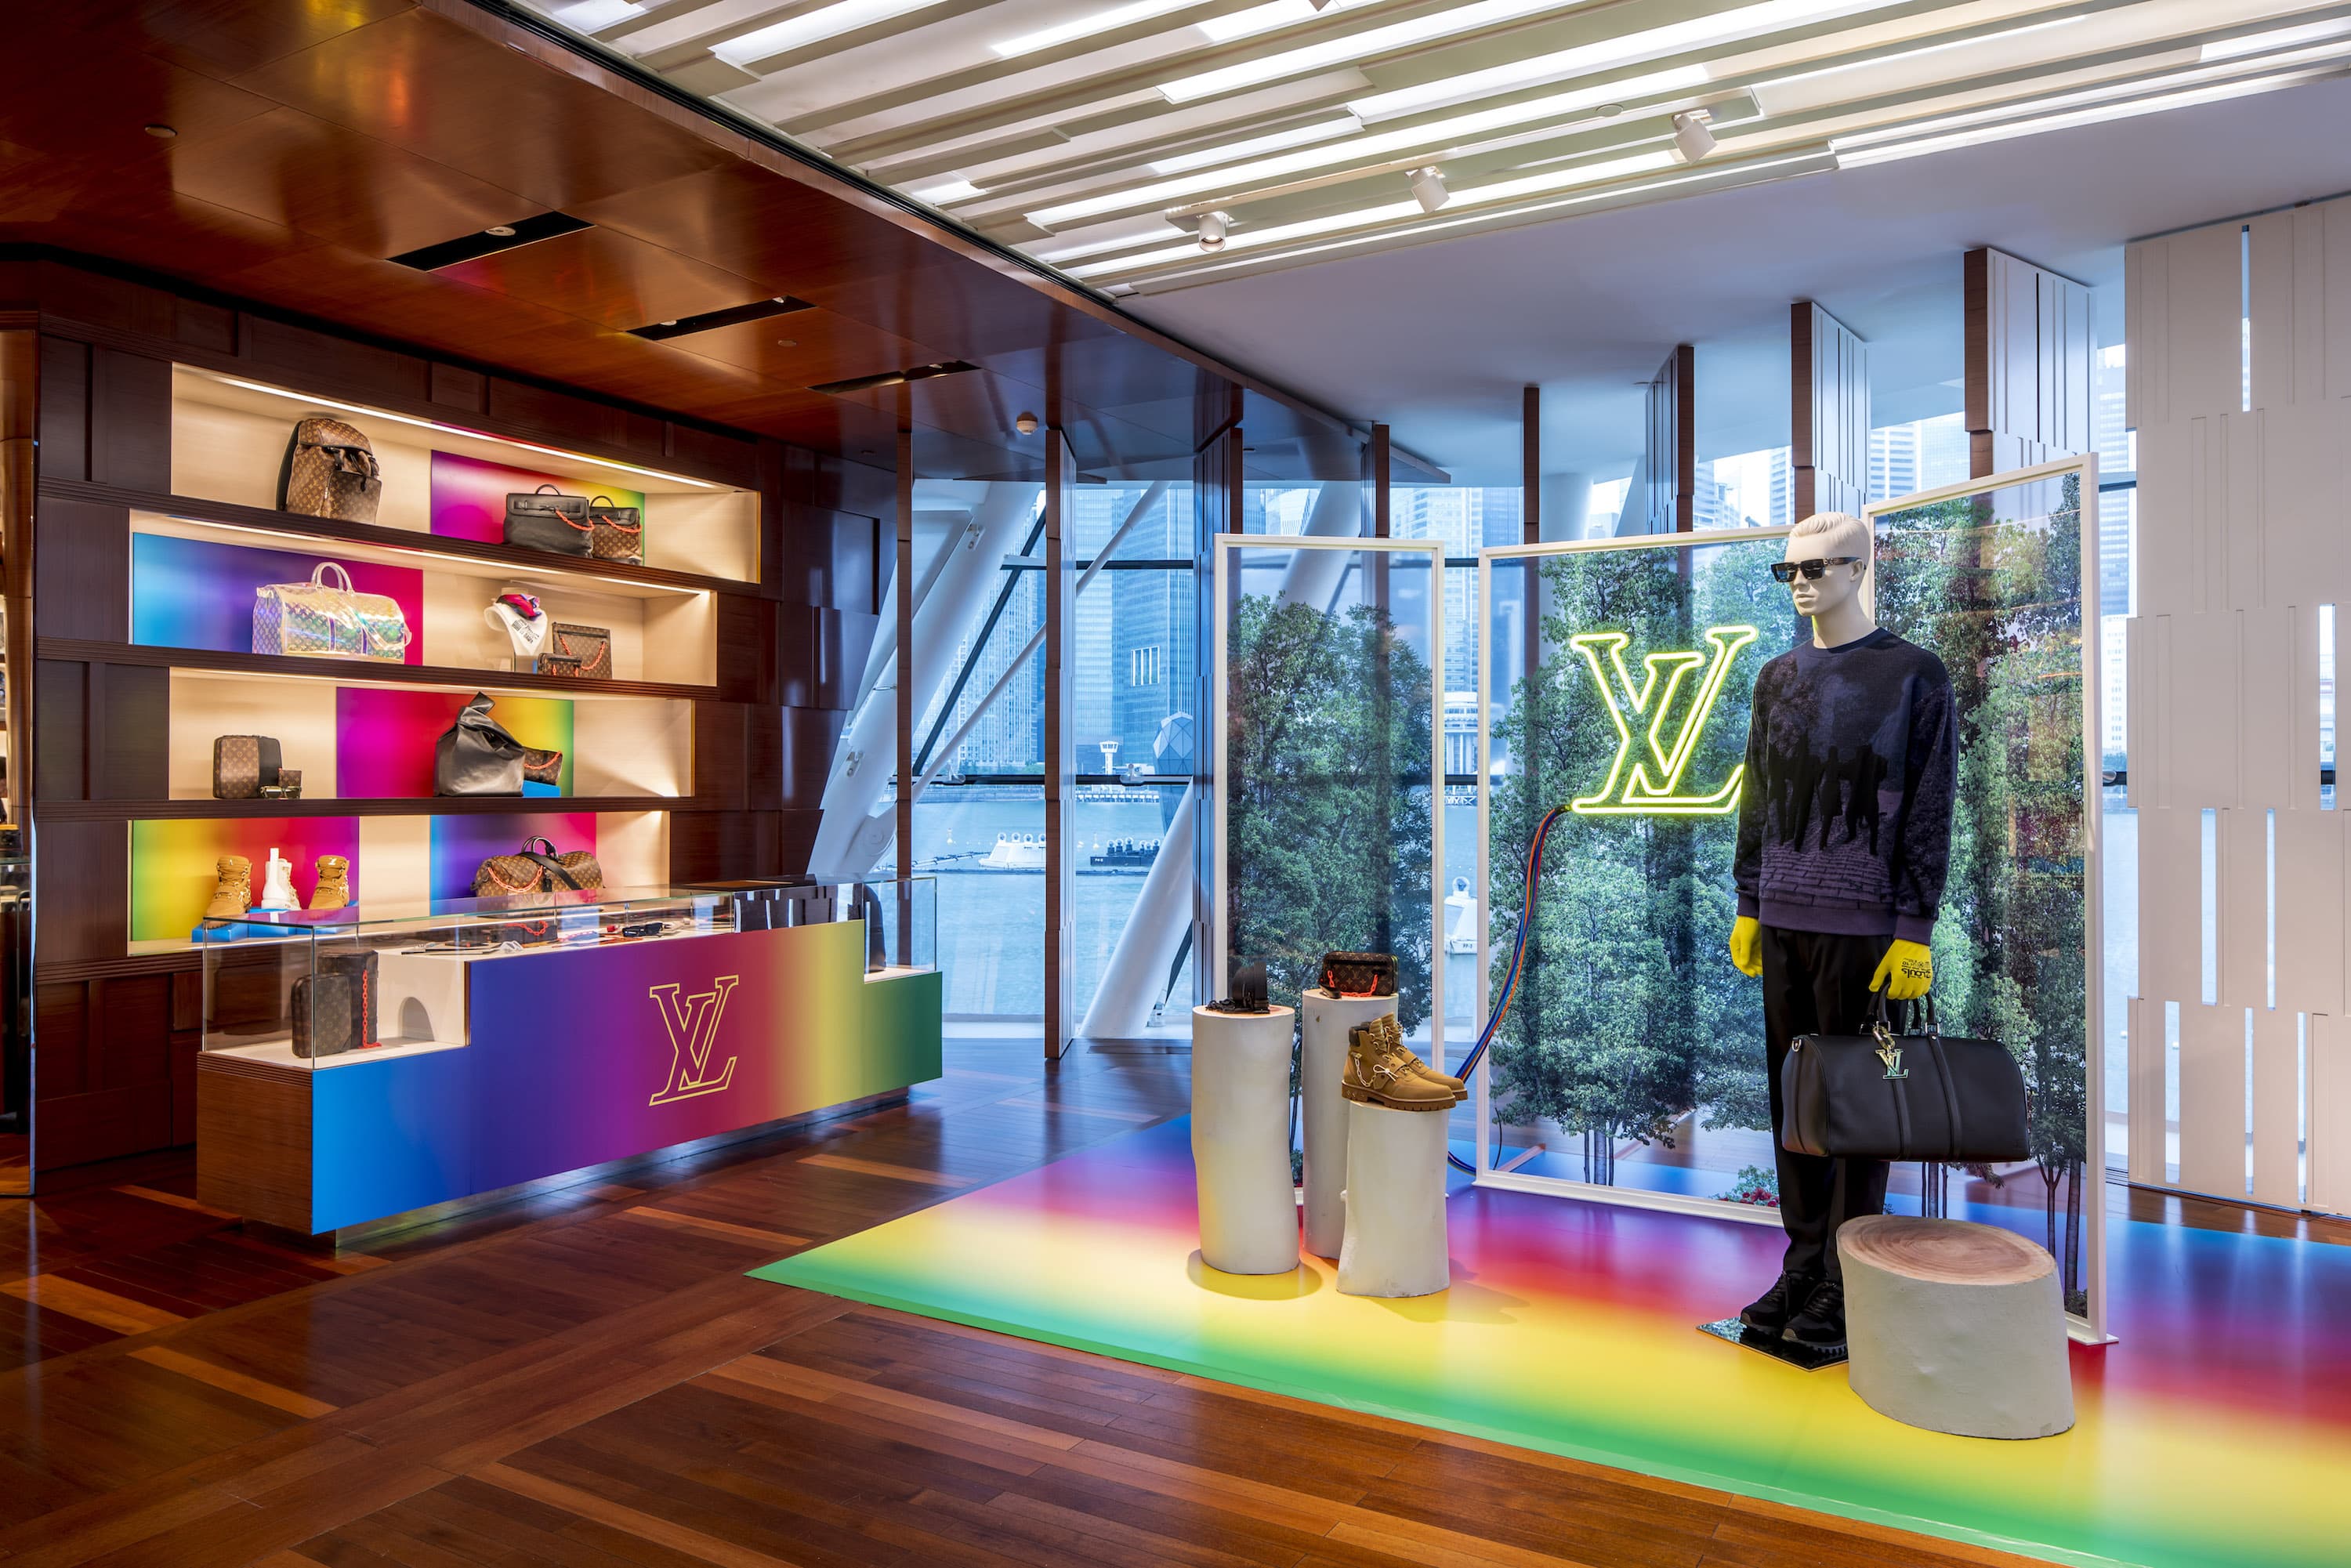 Virgil Abloh's debut collection for Louis Vuitton arrives in Bangkok